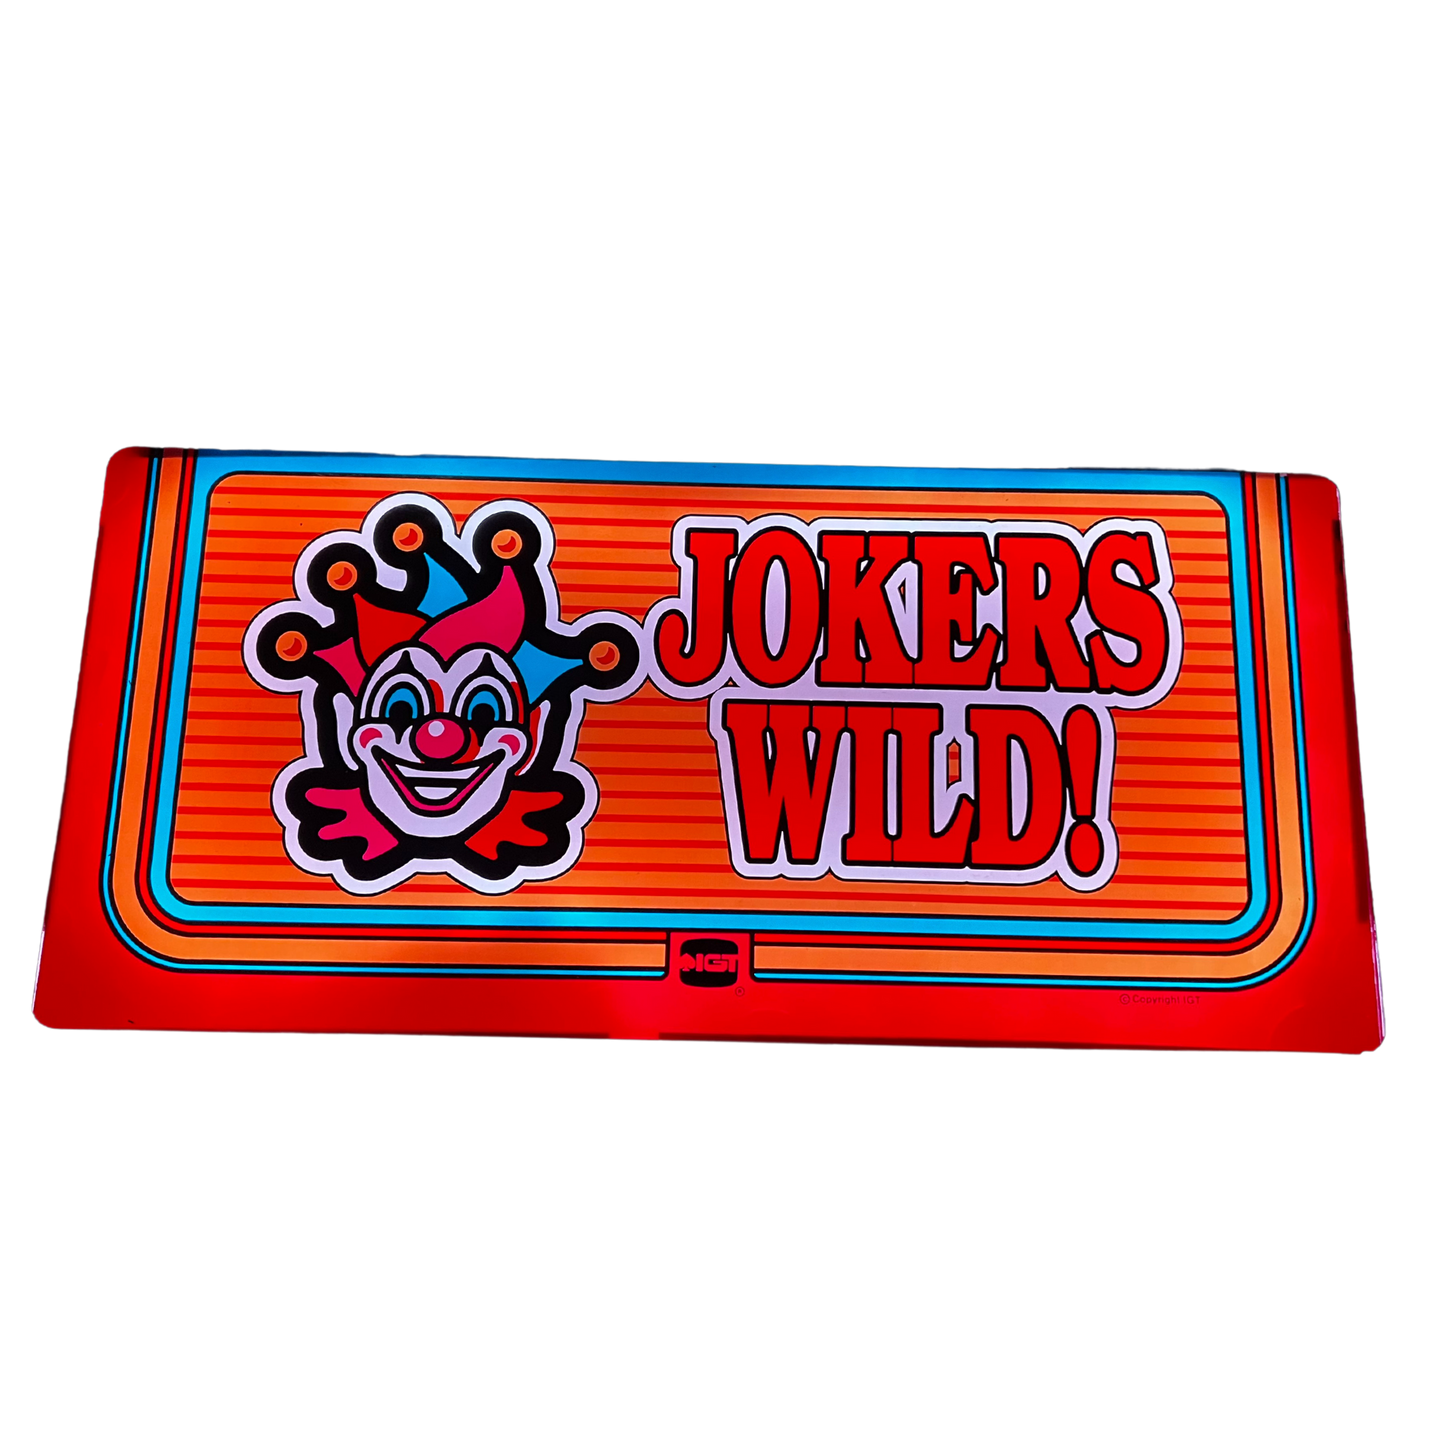 Jokers Wild! Slot Glass